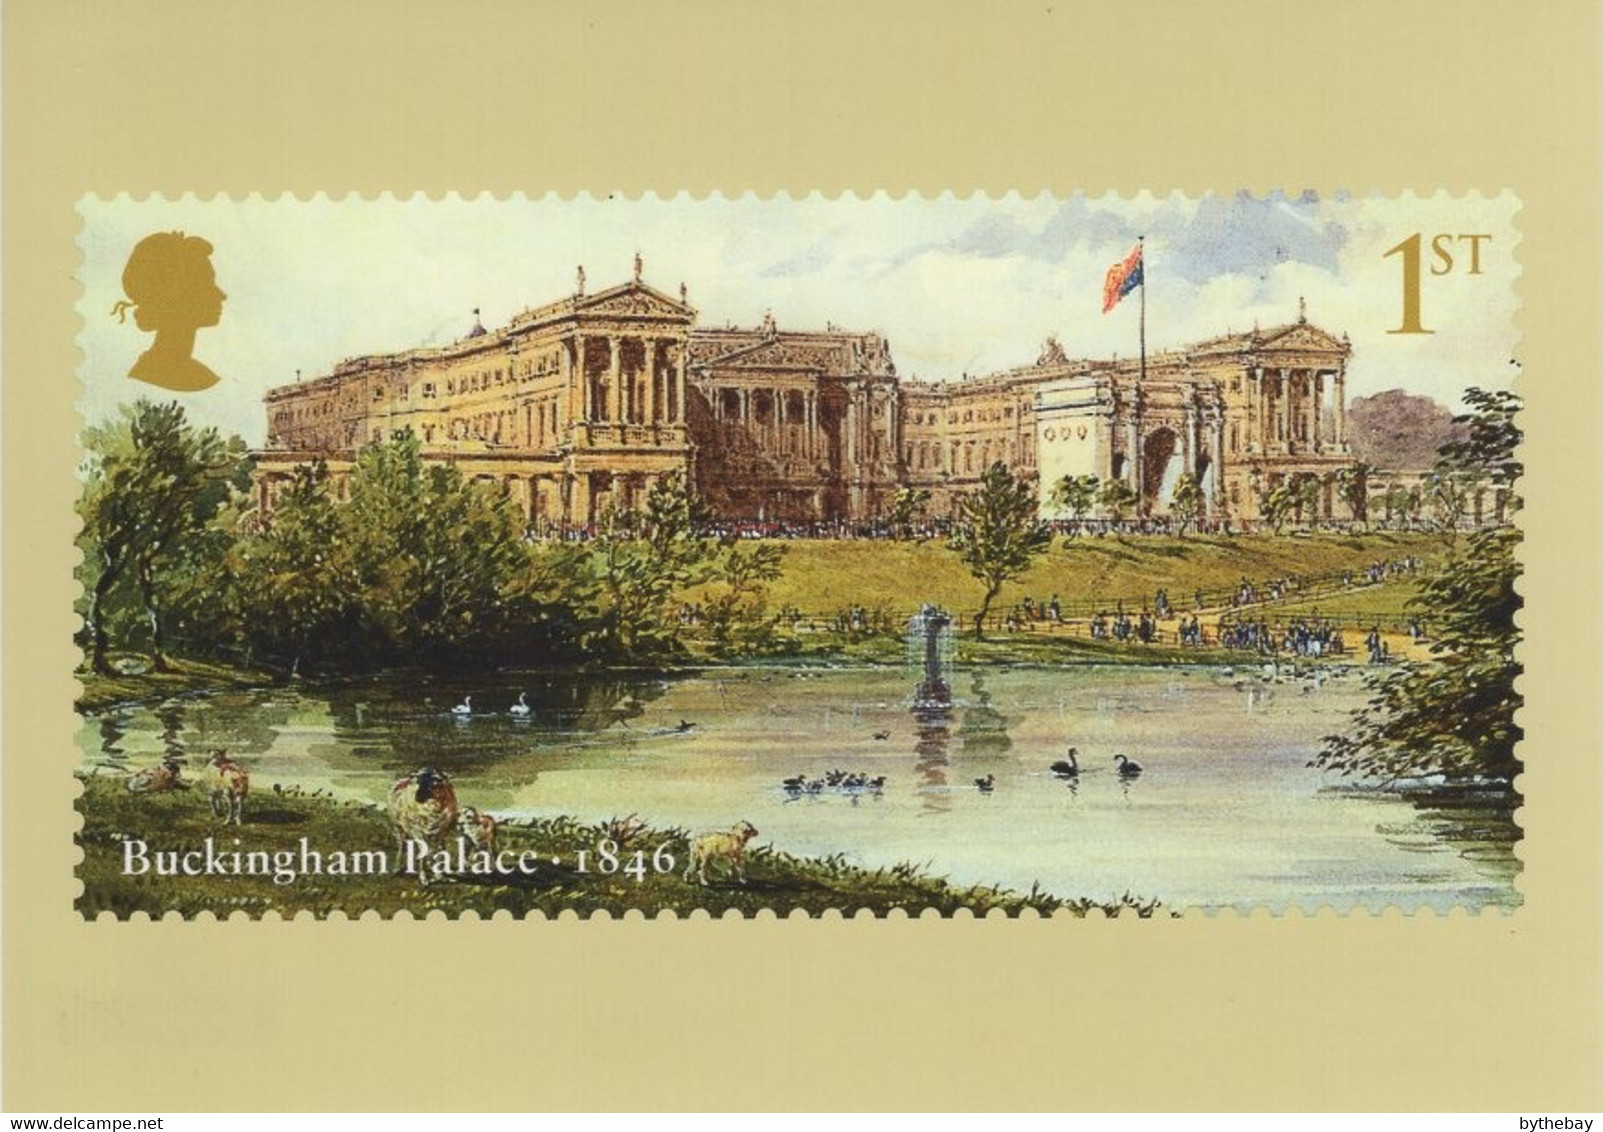 Great Britain 2014 PHQ Card Sc 3281 1st Buckingham Palace 1846 - PHQ Karten